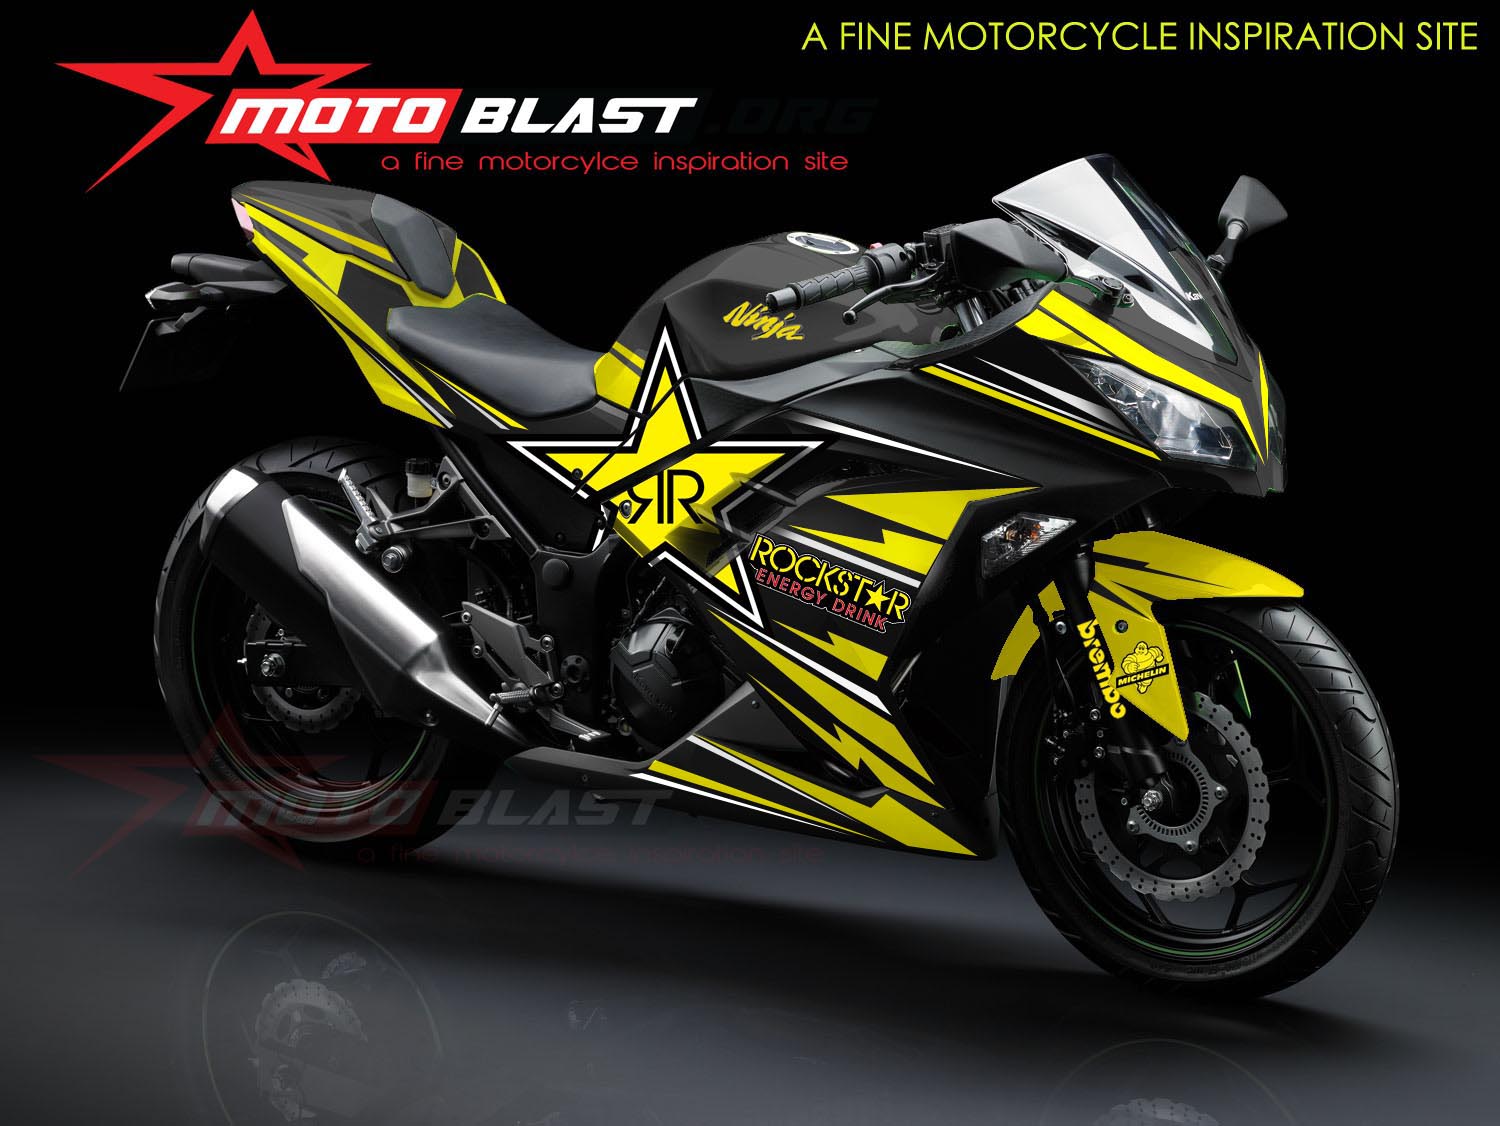 Modif Striping Kawasaki Ninja 250r Fi Black Rockstar New